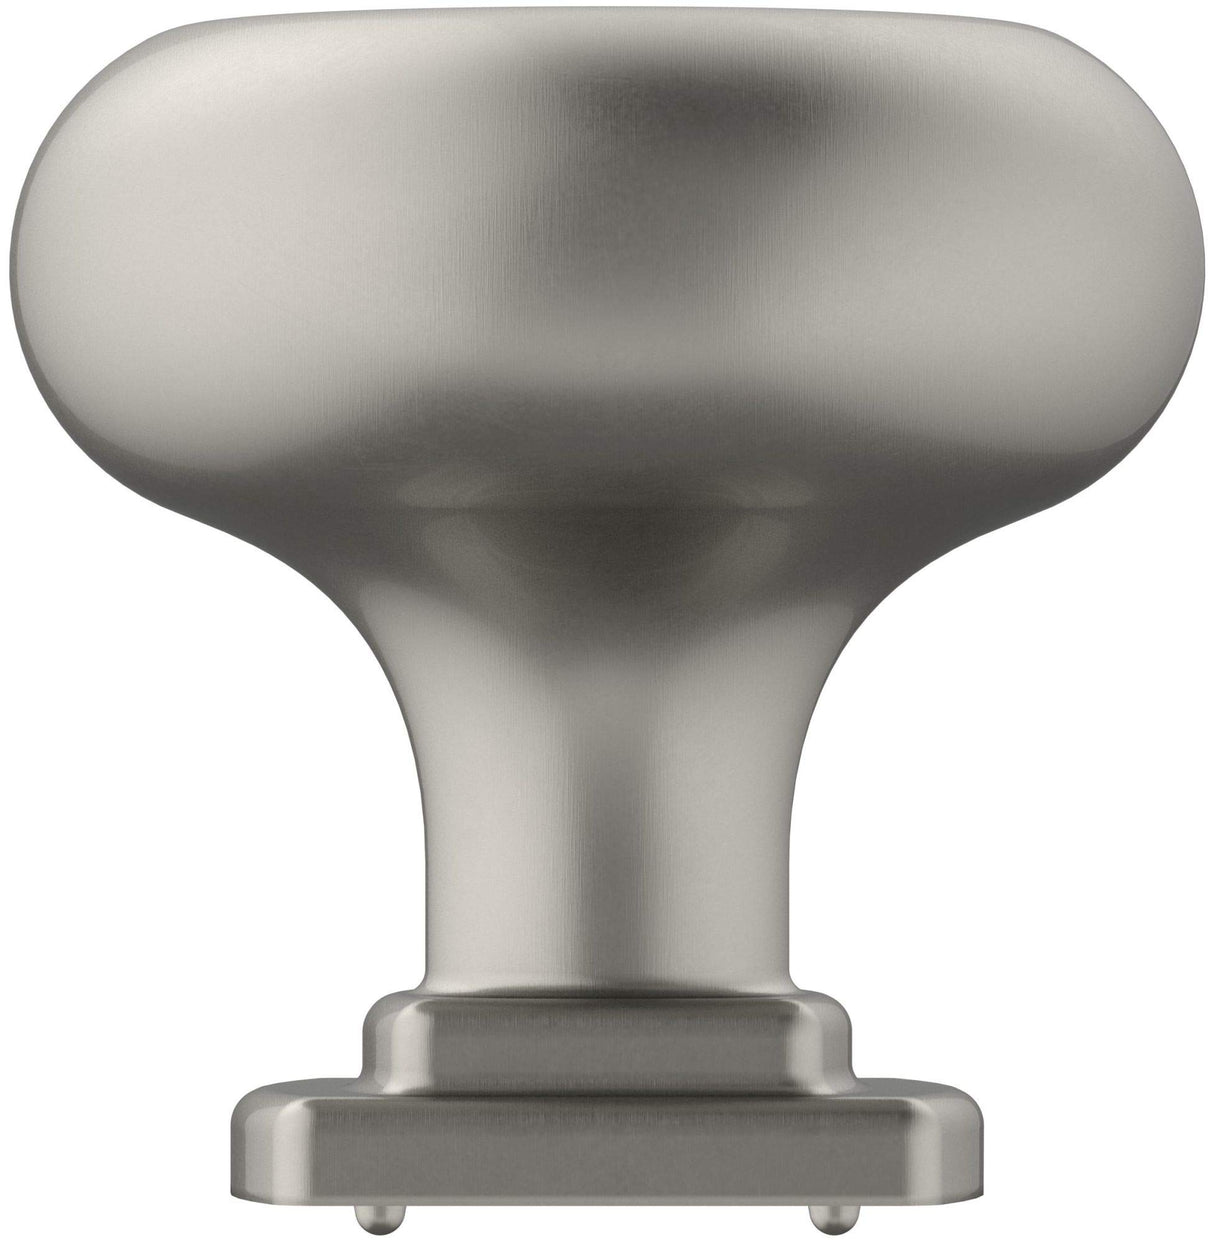 Amerock Cabinet Knob Champagne Bronze 1-1/4 inch (32 mm) Diameter Surpass 1 Pack Drawer Knob Cabinet Hardware